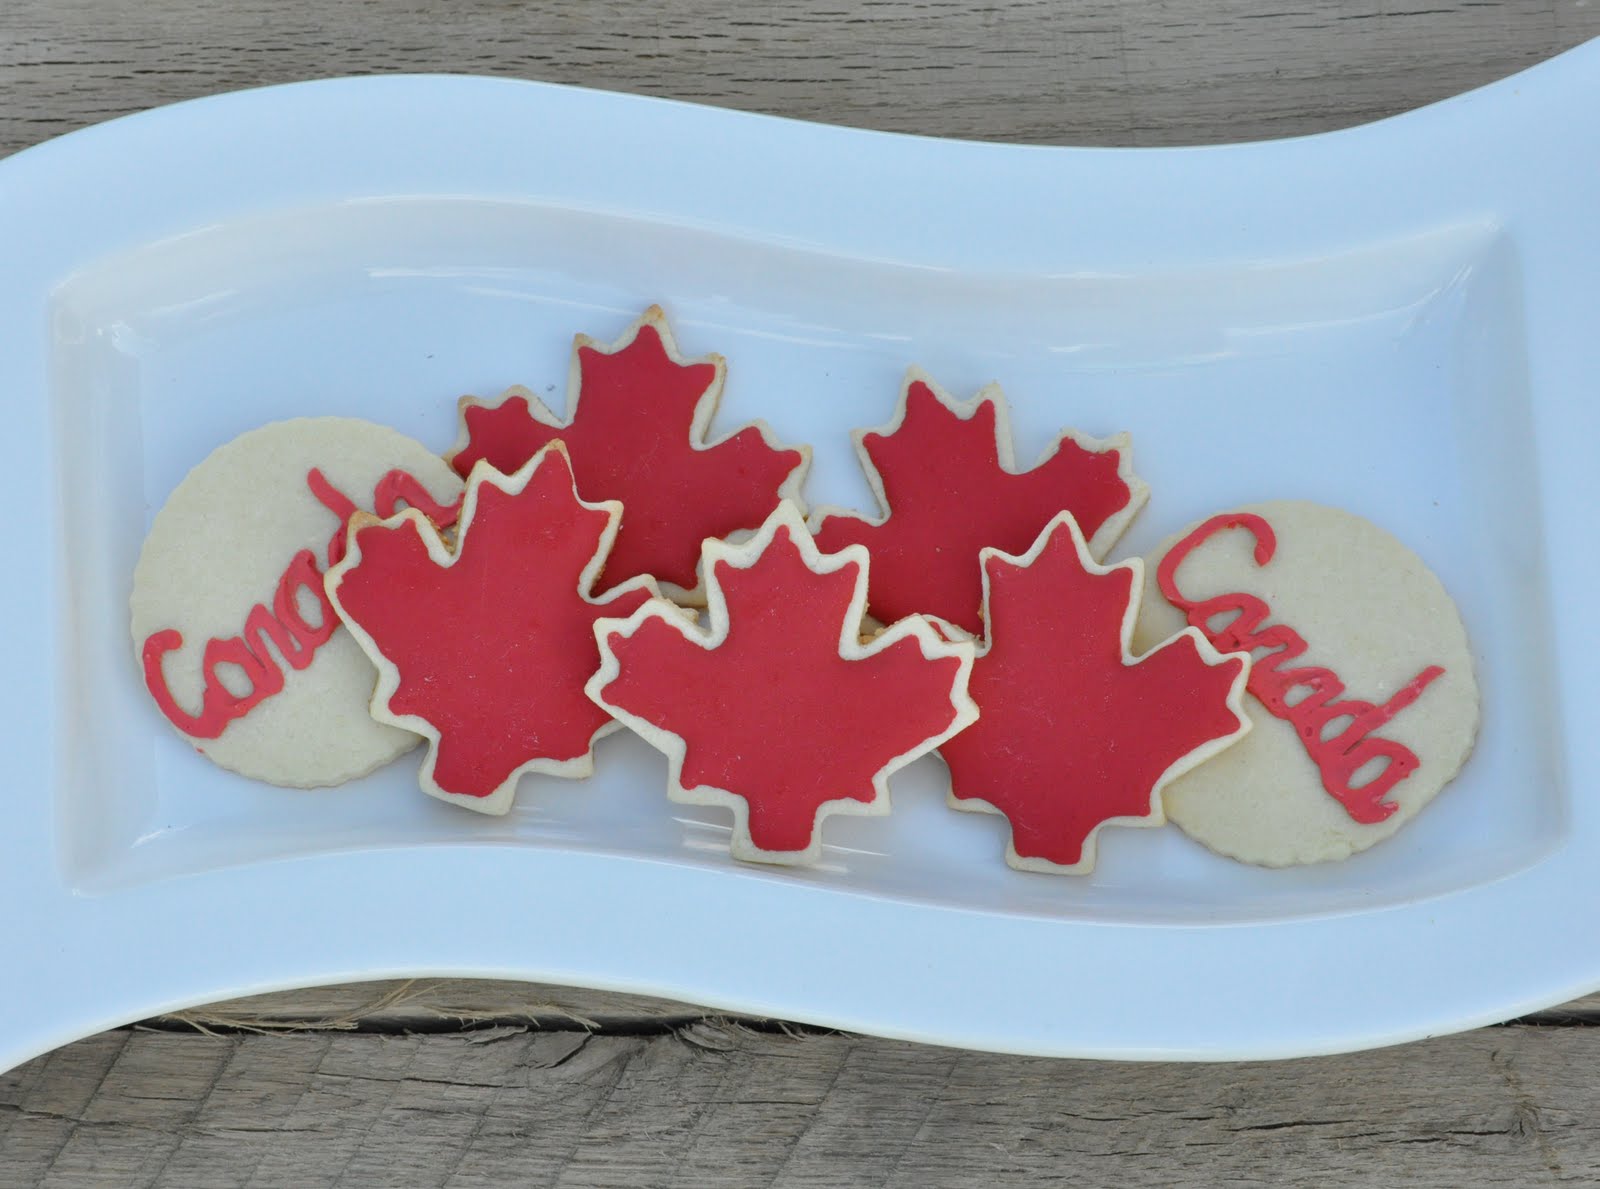 Canada+day+cake+designs